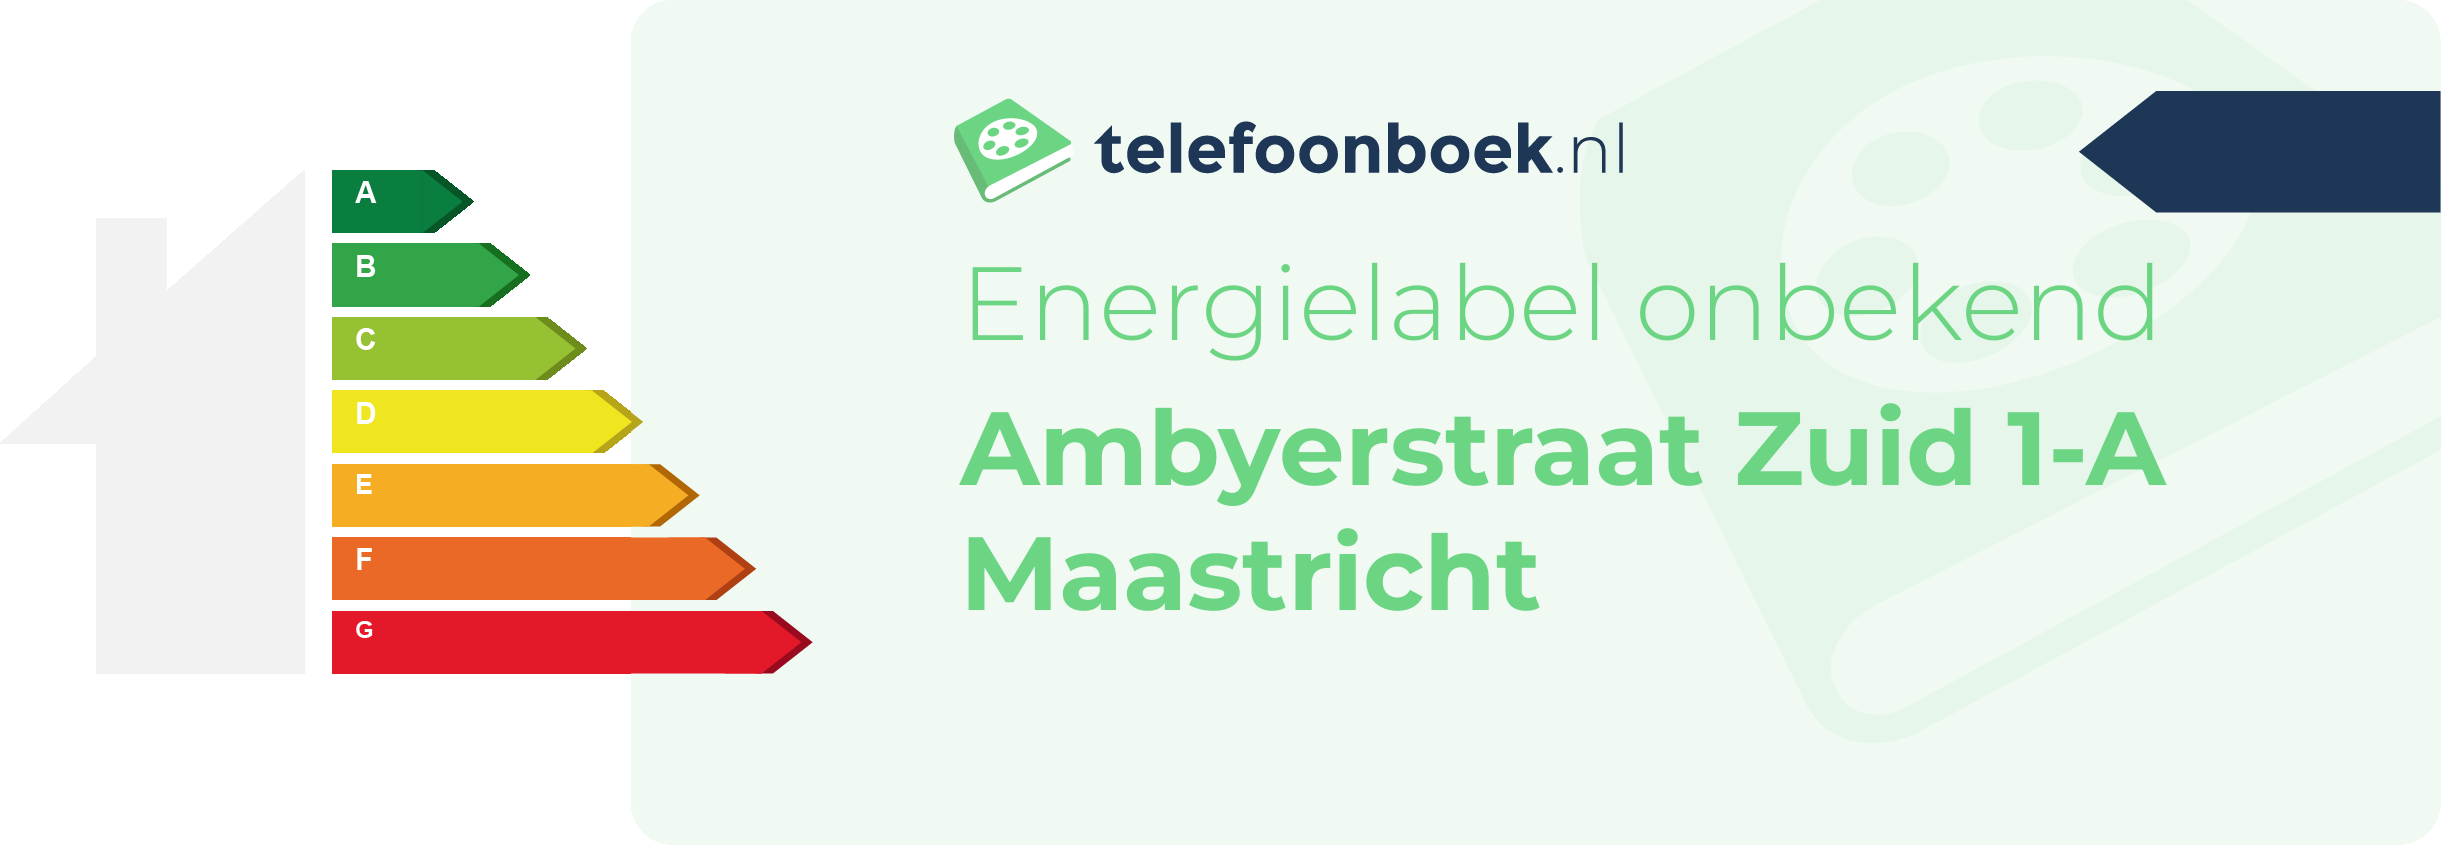 Energielabel Ambyerstraat Zuid 1-A Maastricht